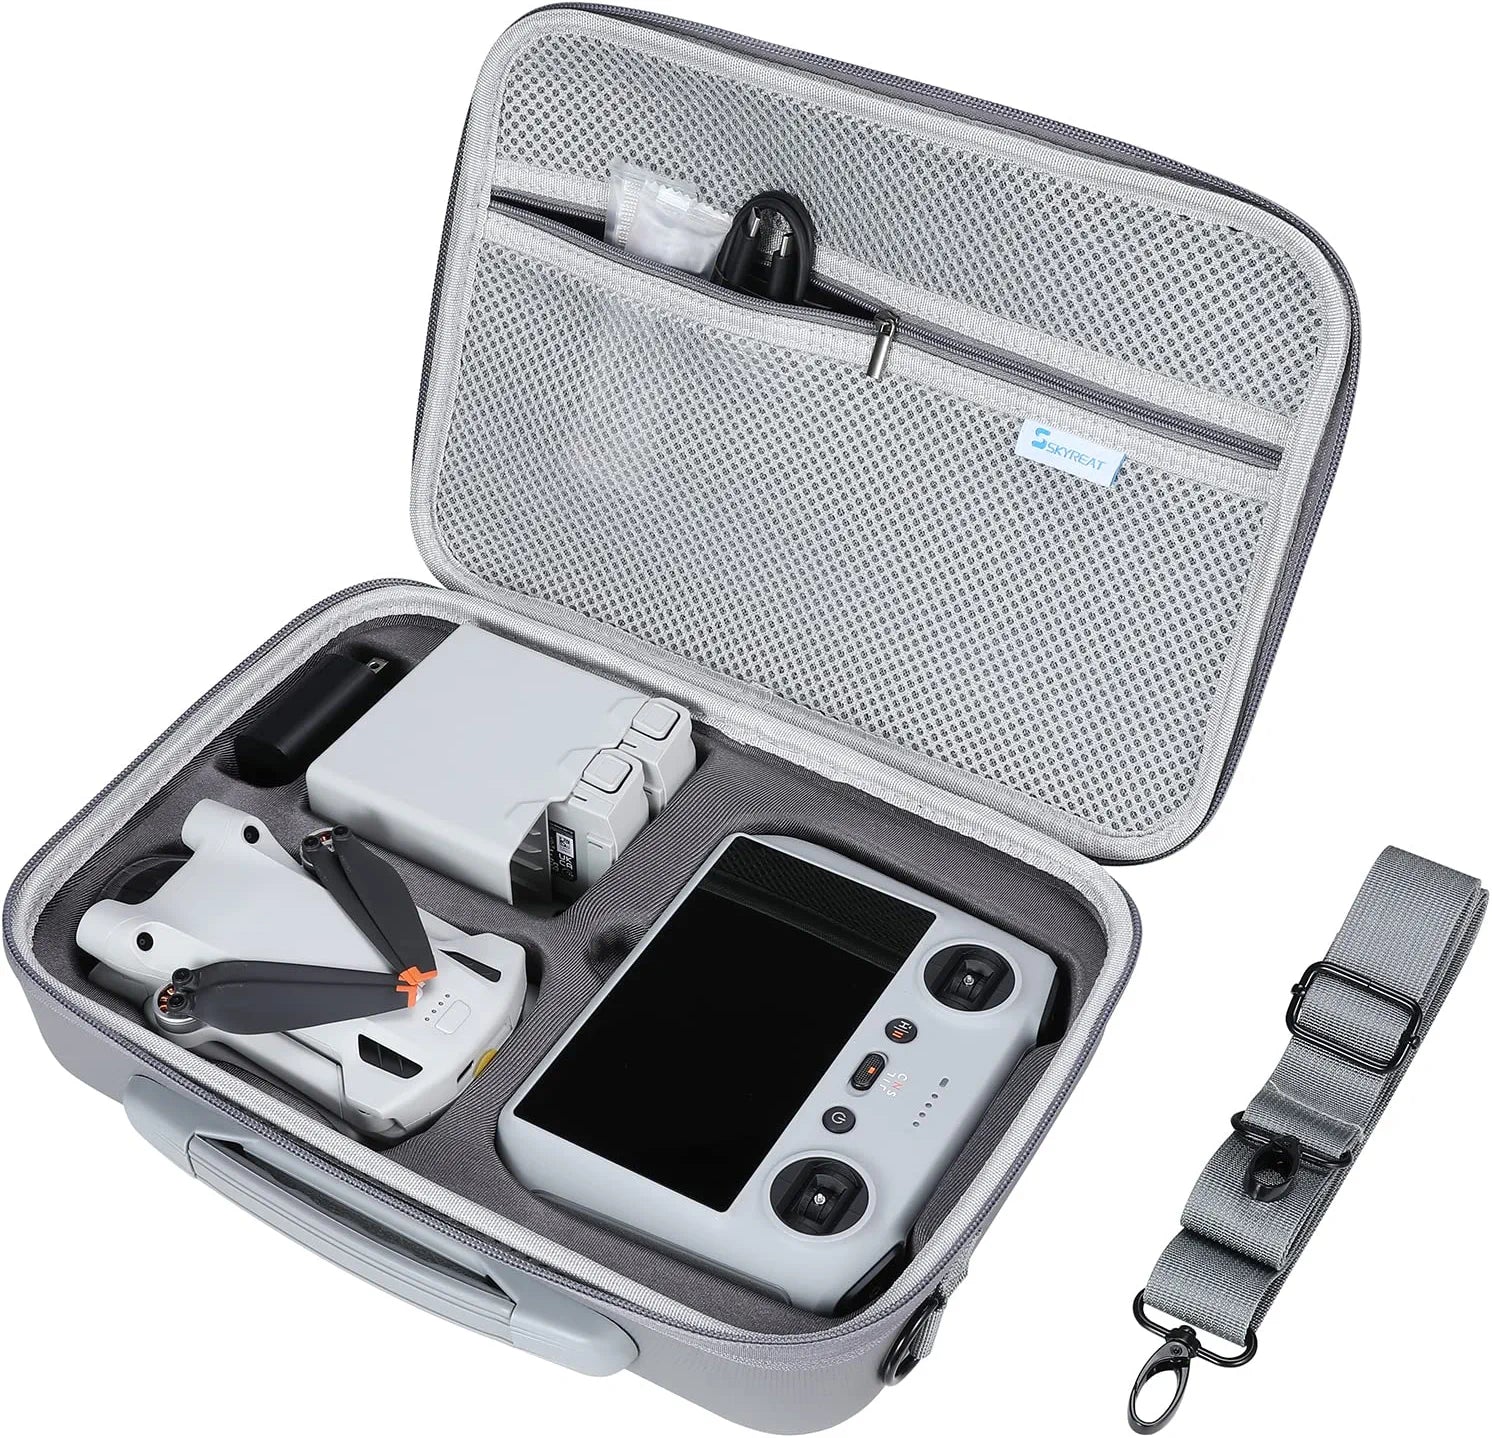 Waterproof Hard Case for DJI Mini 3 Pro, Double Layer Carrying Case for DJI  Mini 3 Pro, DJI Mini 3 Large Capacity Case, Professional DJI Mini 3 Pro